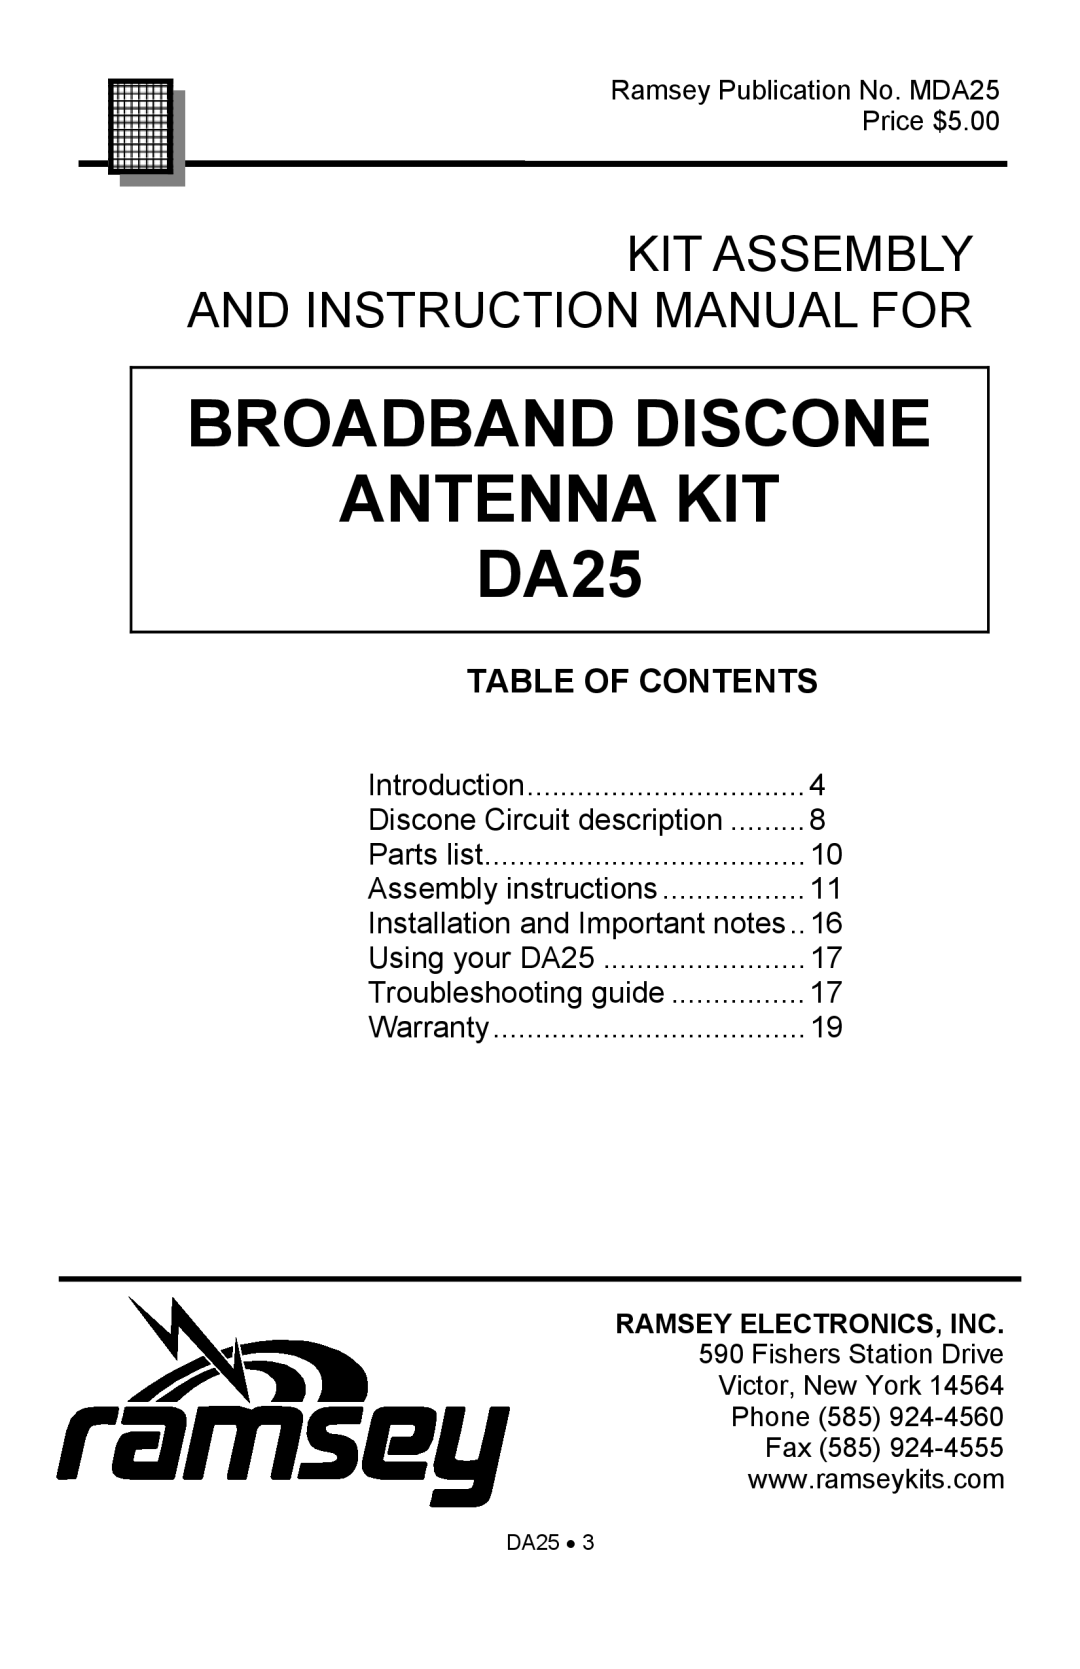 Ramsey Electronics manual BROADBAND DISCONE ANTENNA KIT DA25, Table Of Contents 